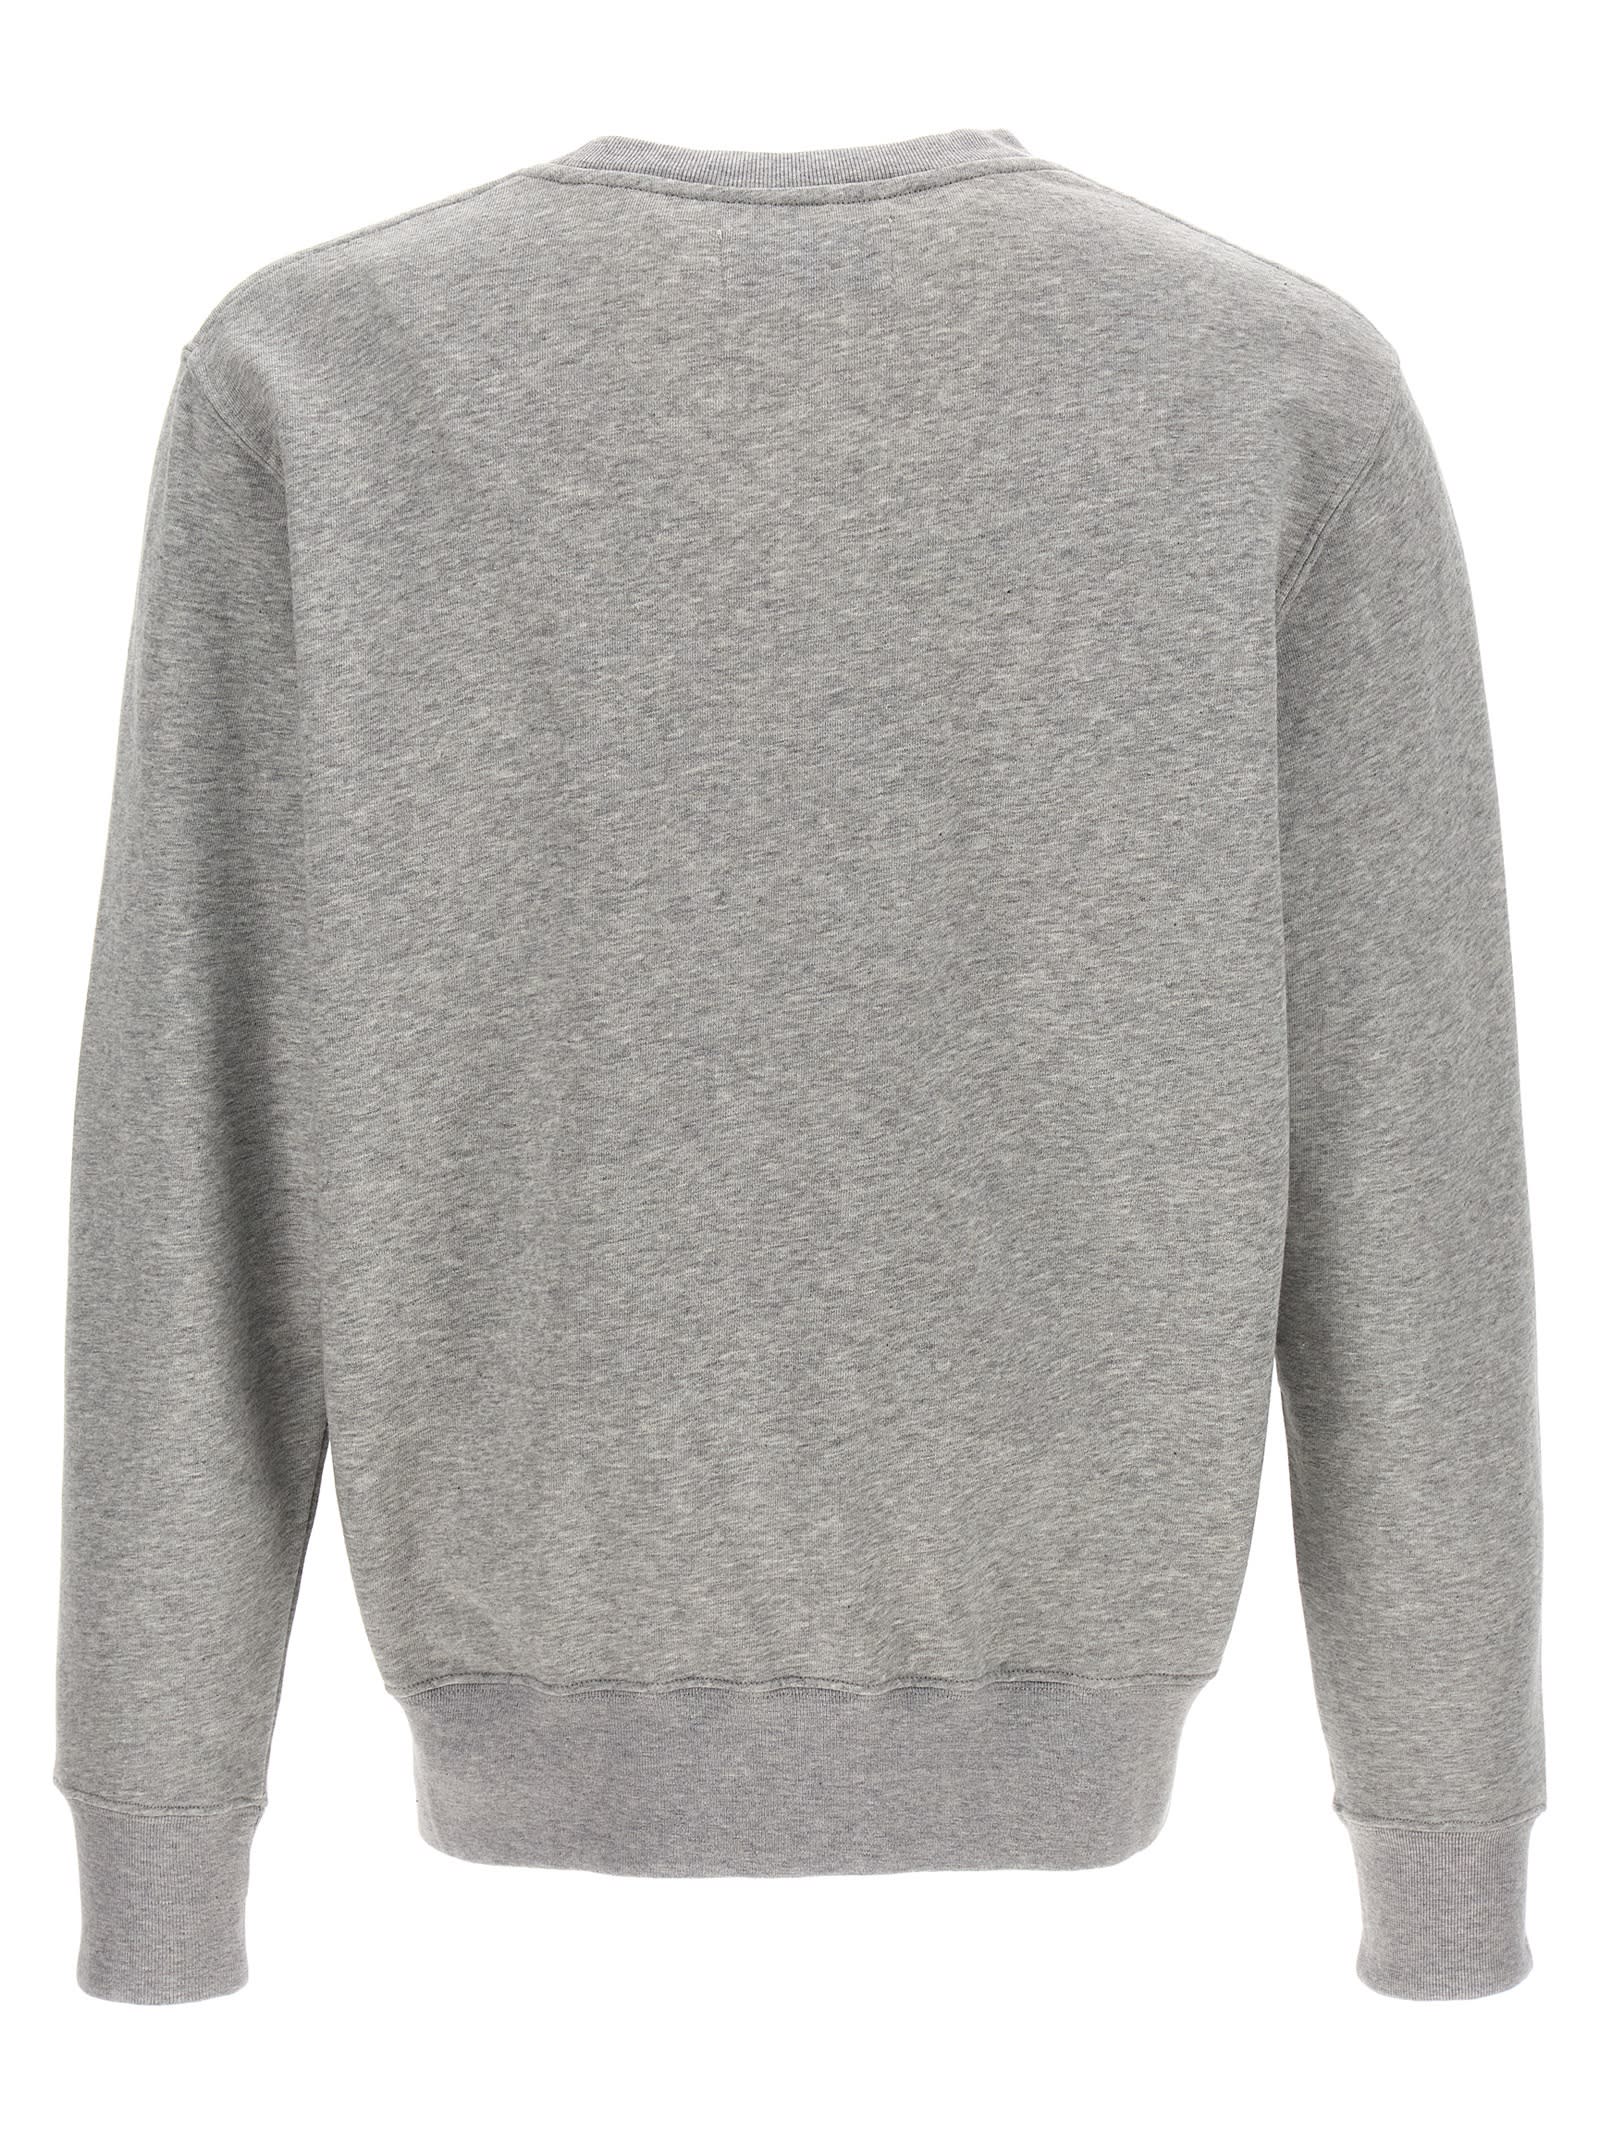 Shop Autry Logo Sweatshirt In Grey